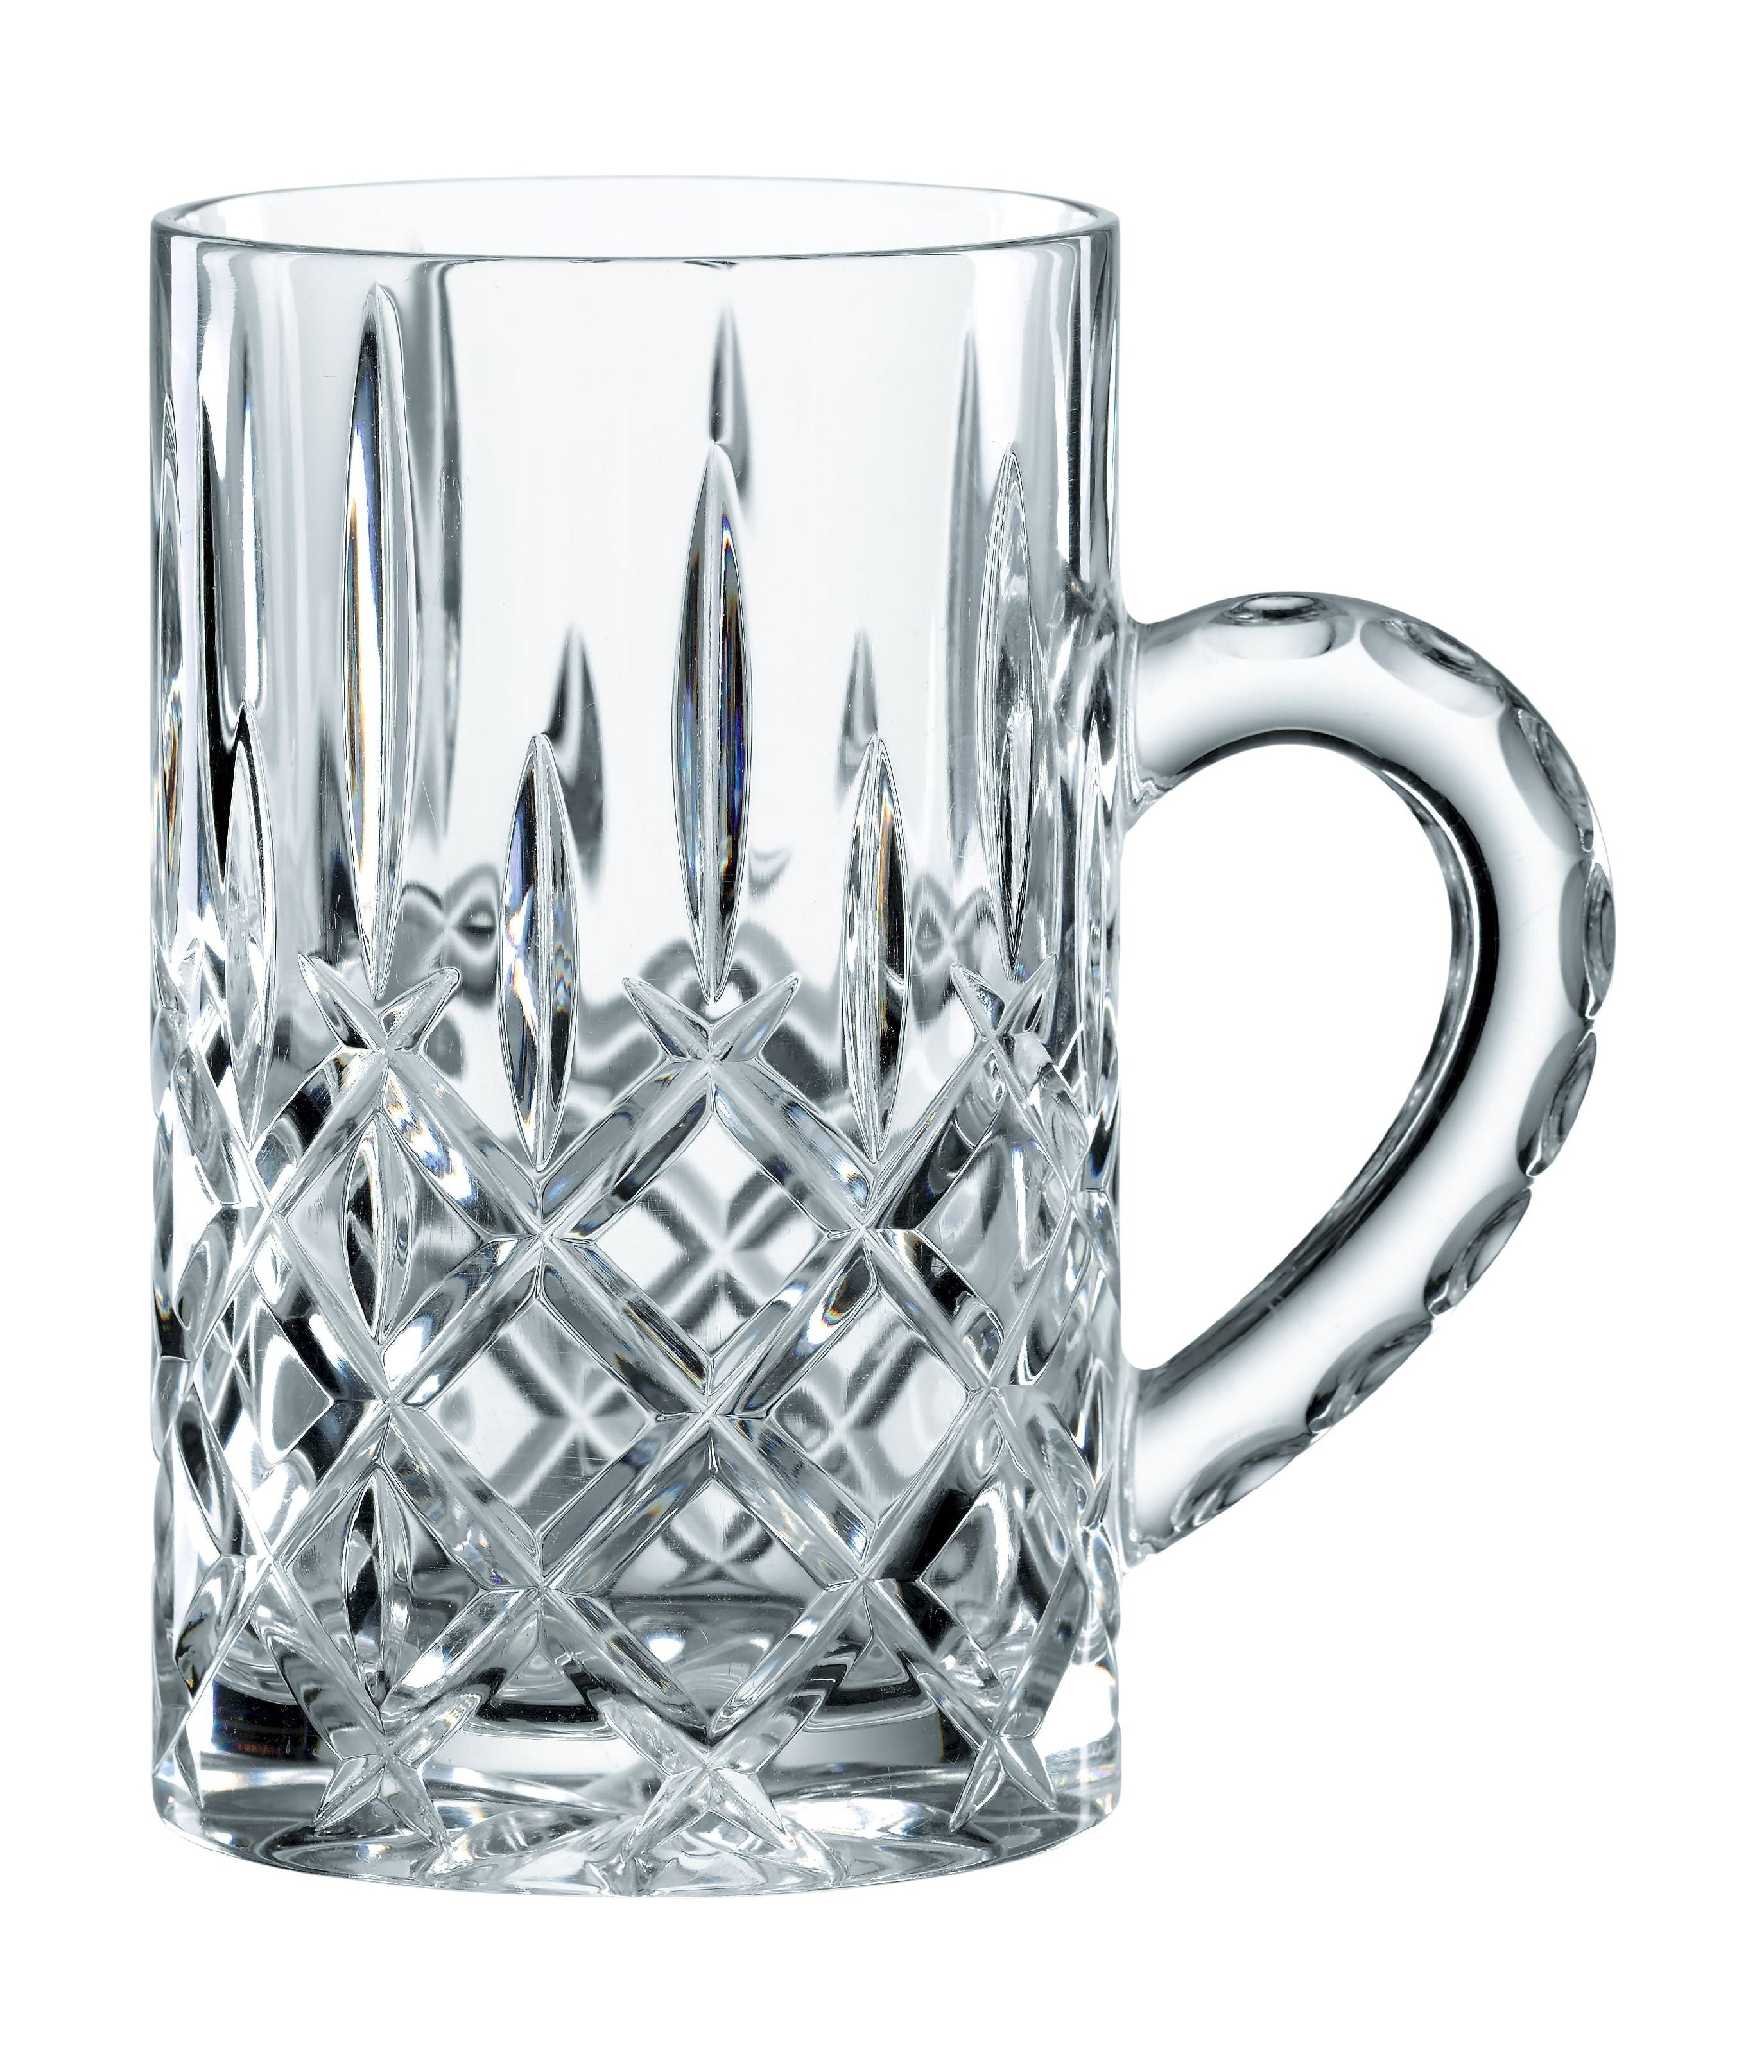 Nachtmann Noblesse Glass för varma drycker, 2 st.